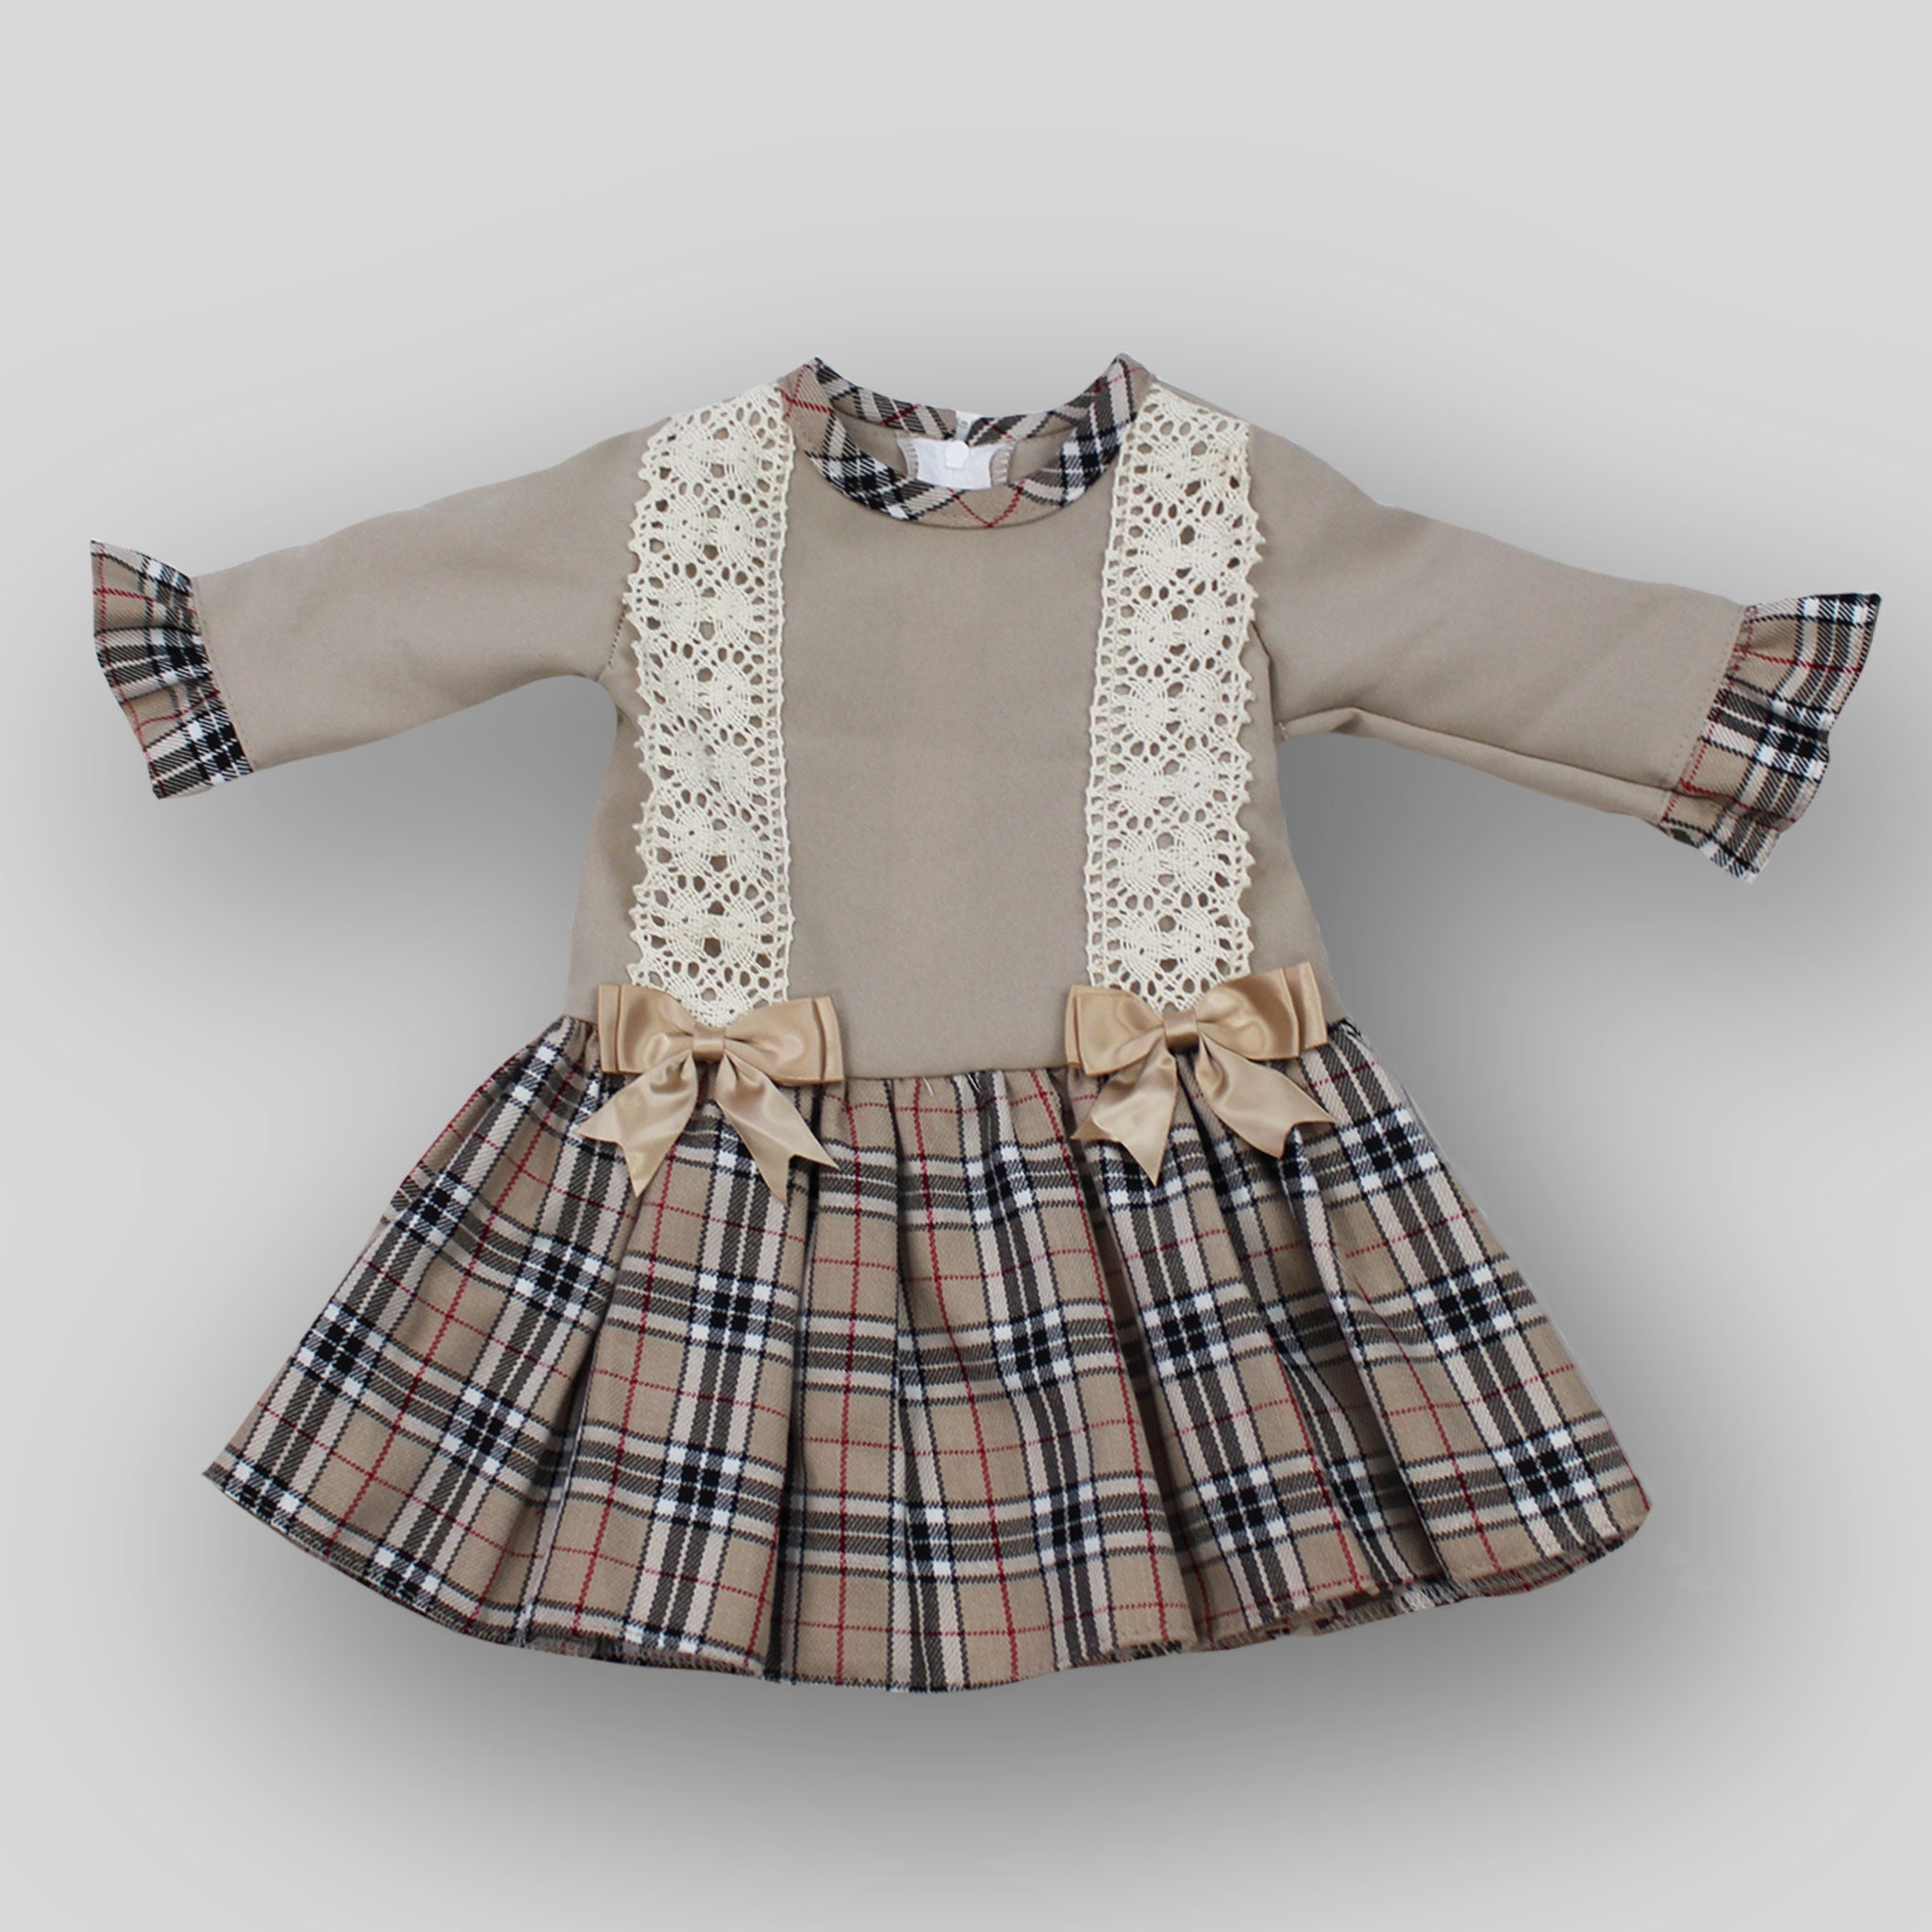 Burberry style baby tartan dress 